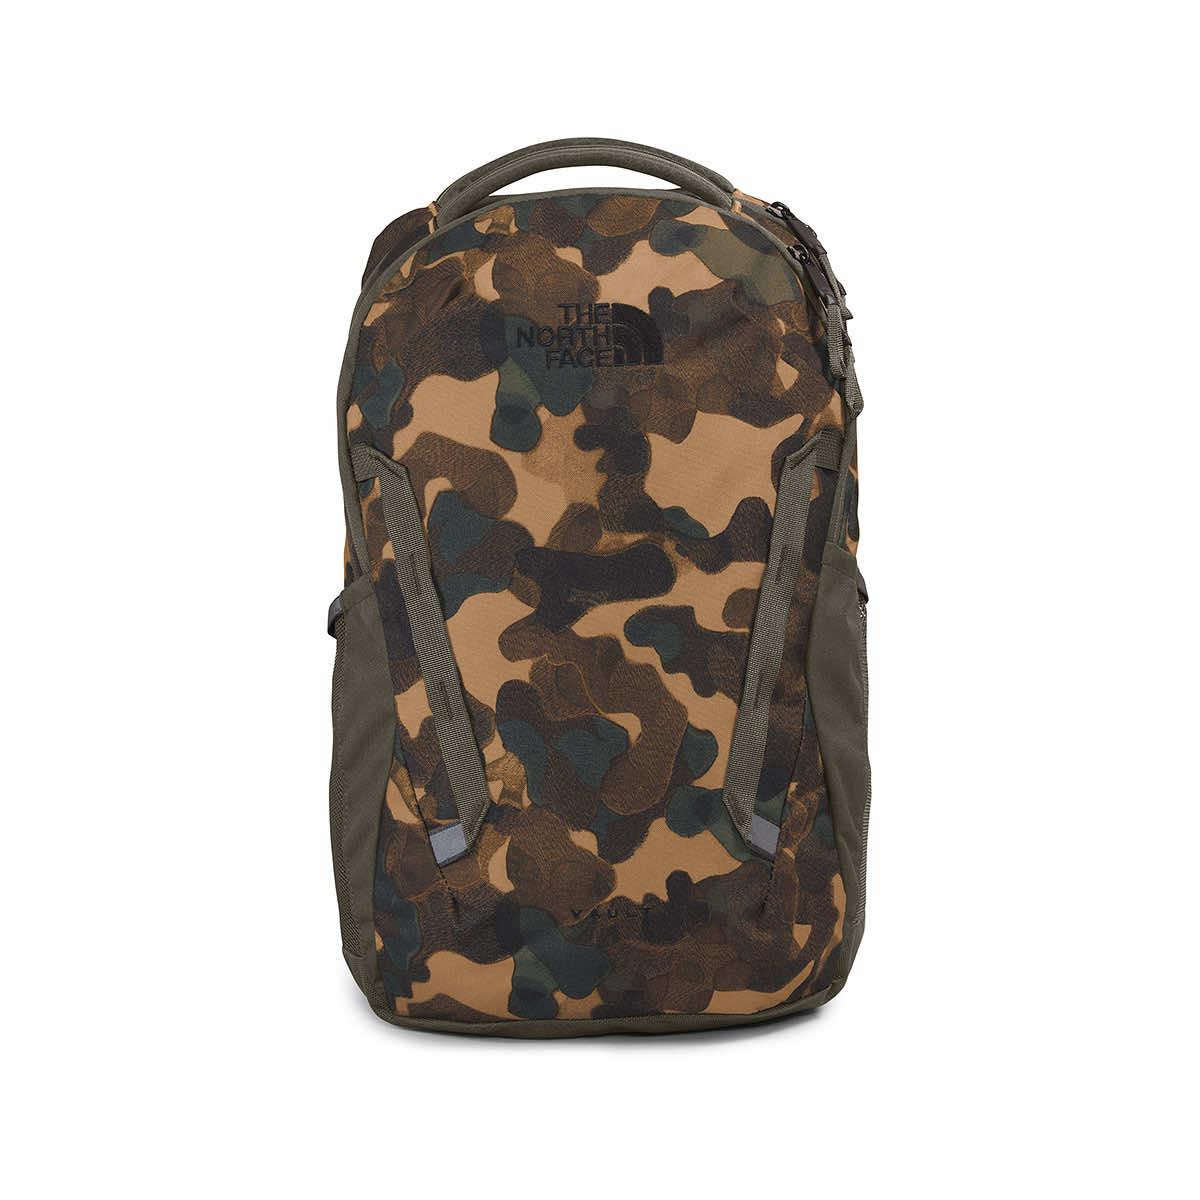 Ferrara Brown Vegan Leather Backpack